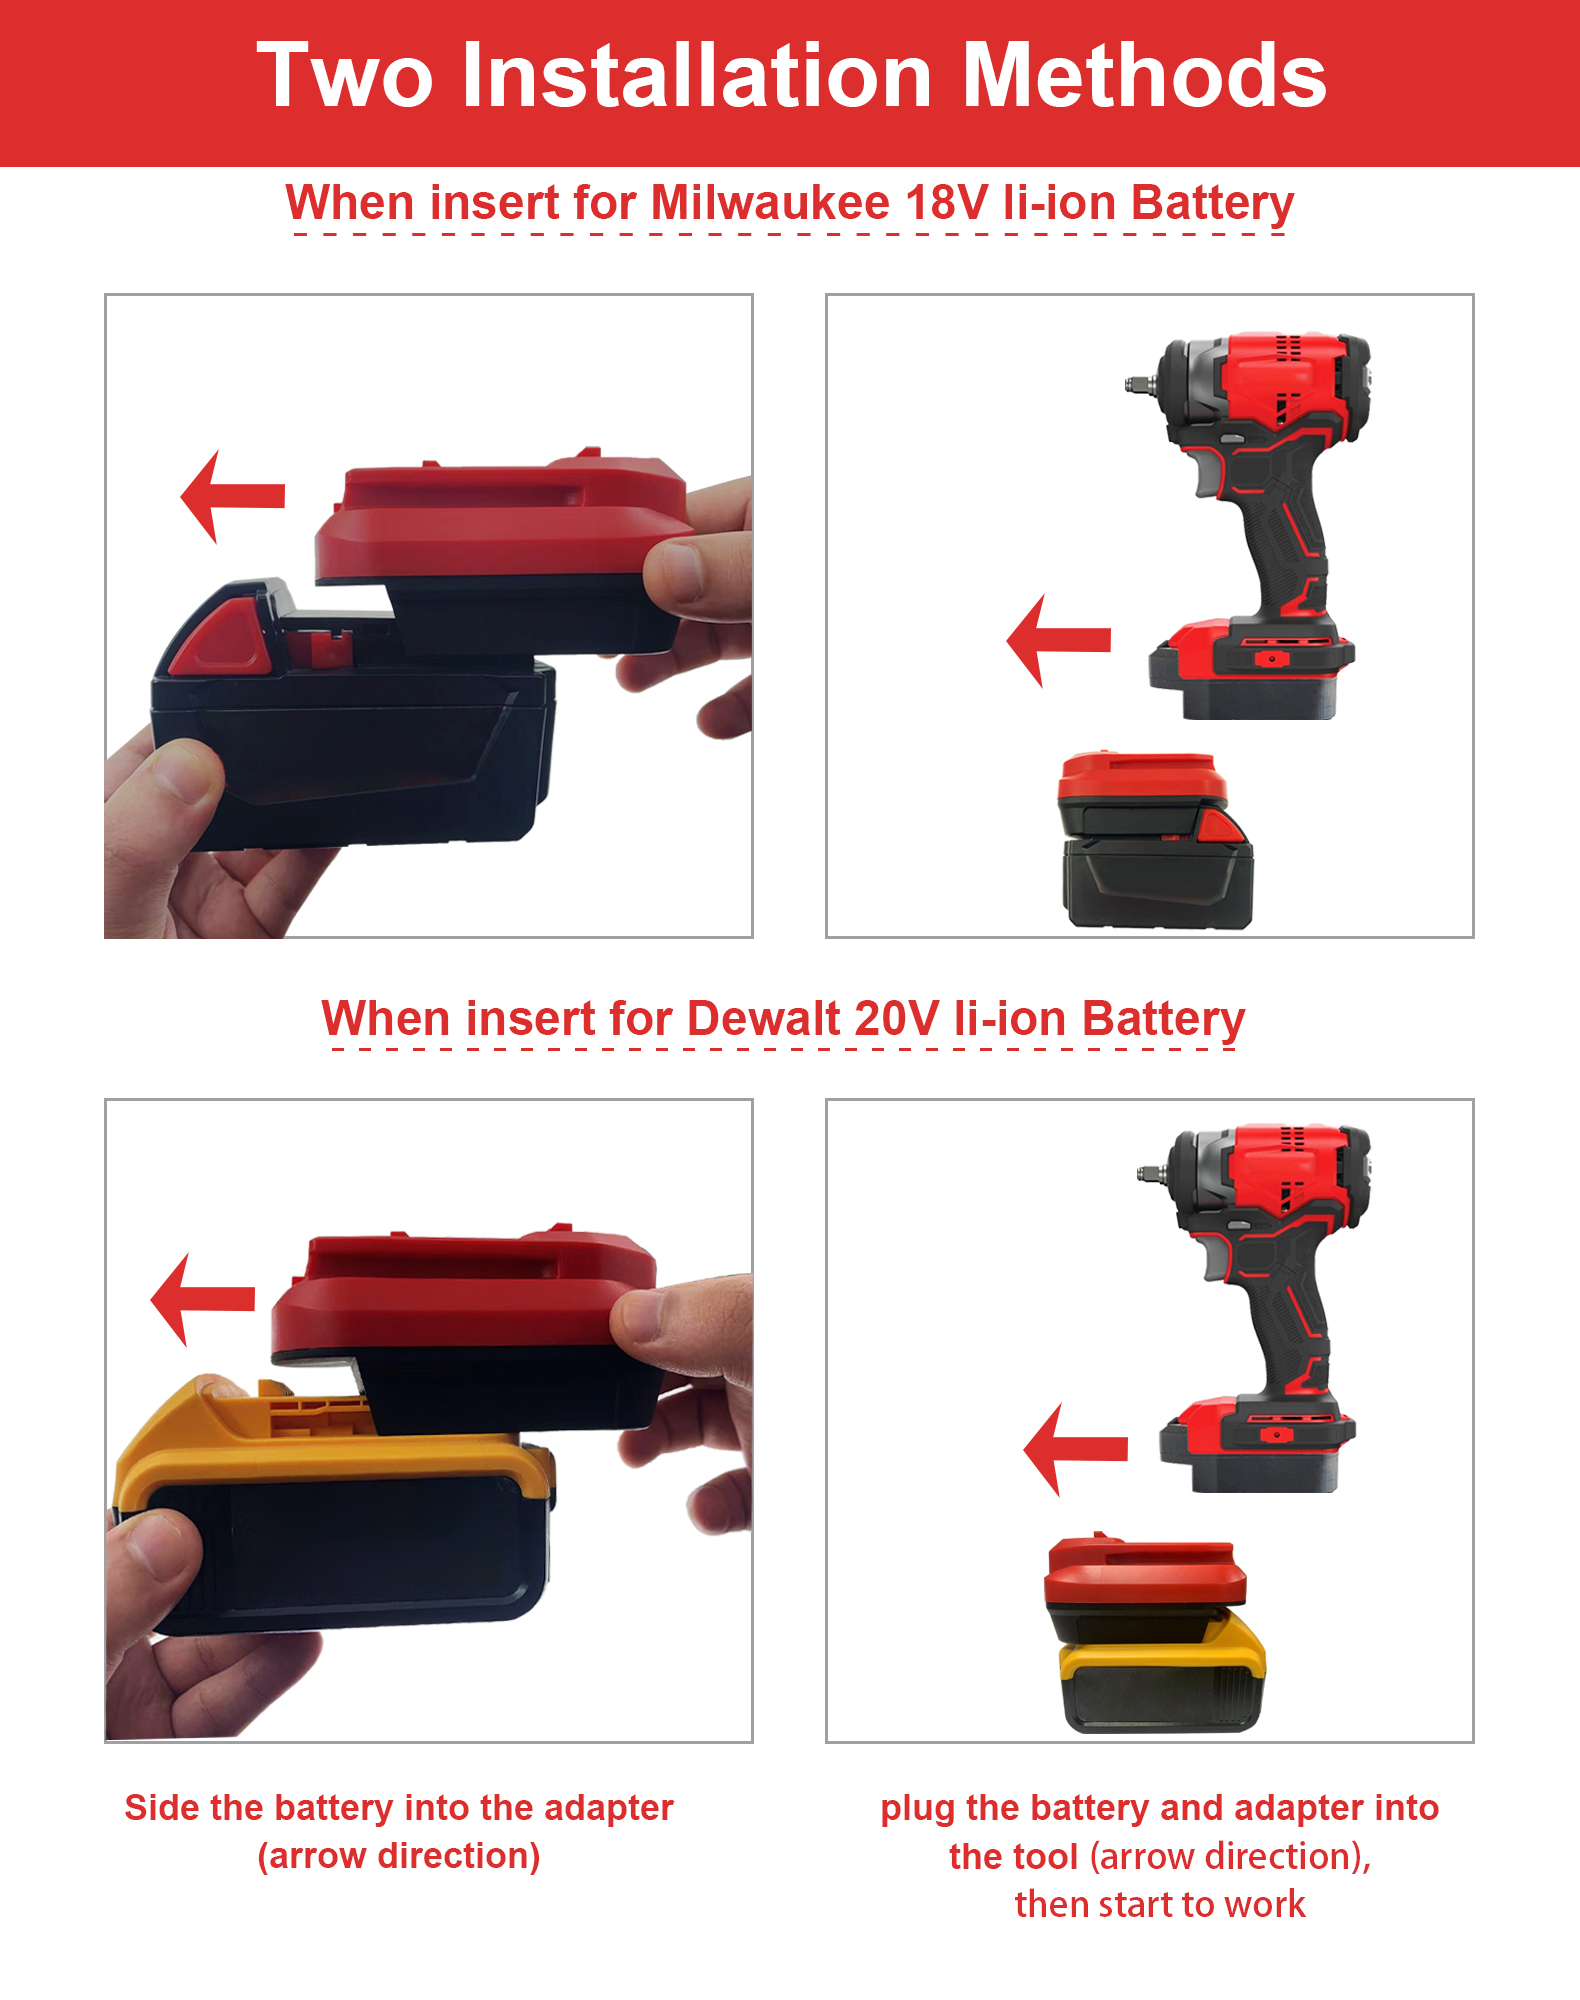 Adattatore batteria per batteria DeWalt e Milwaukee Lion Converti in utensili cordless Craftsman 20V